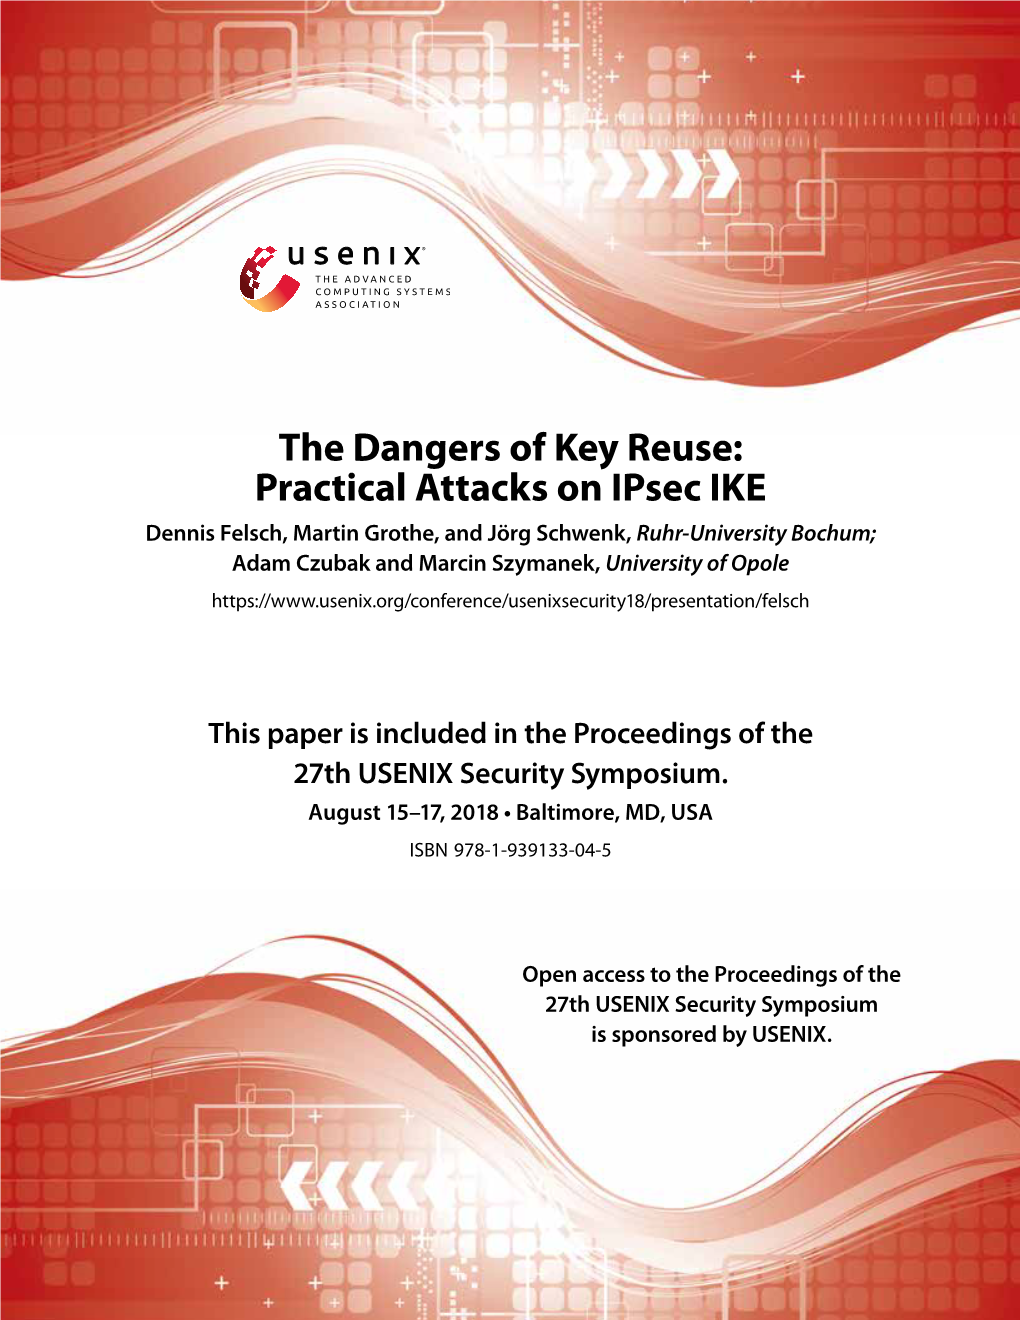 The Dangers of Key Reuse: Practical Attacks on Ipsec